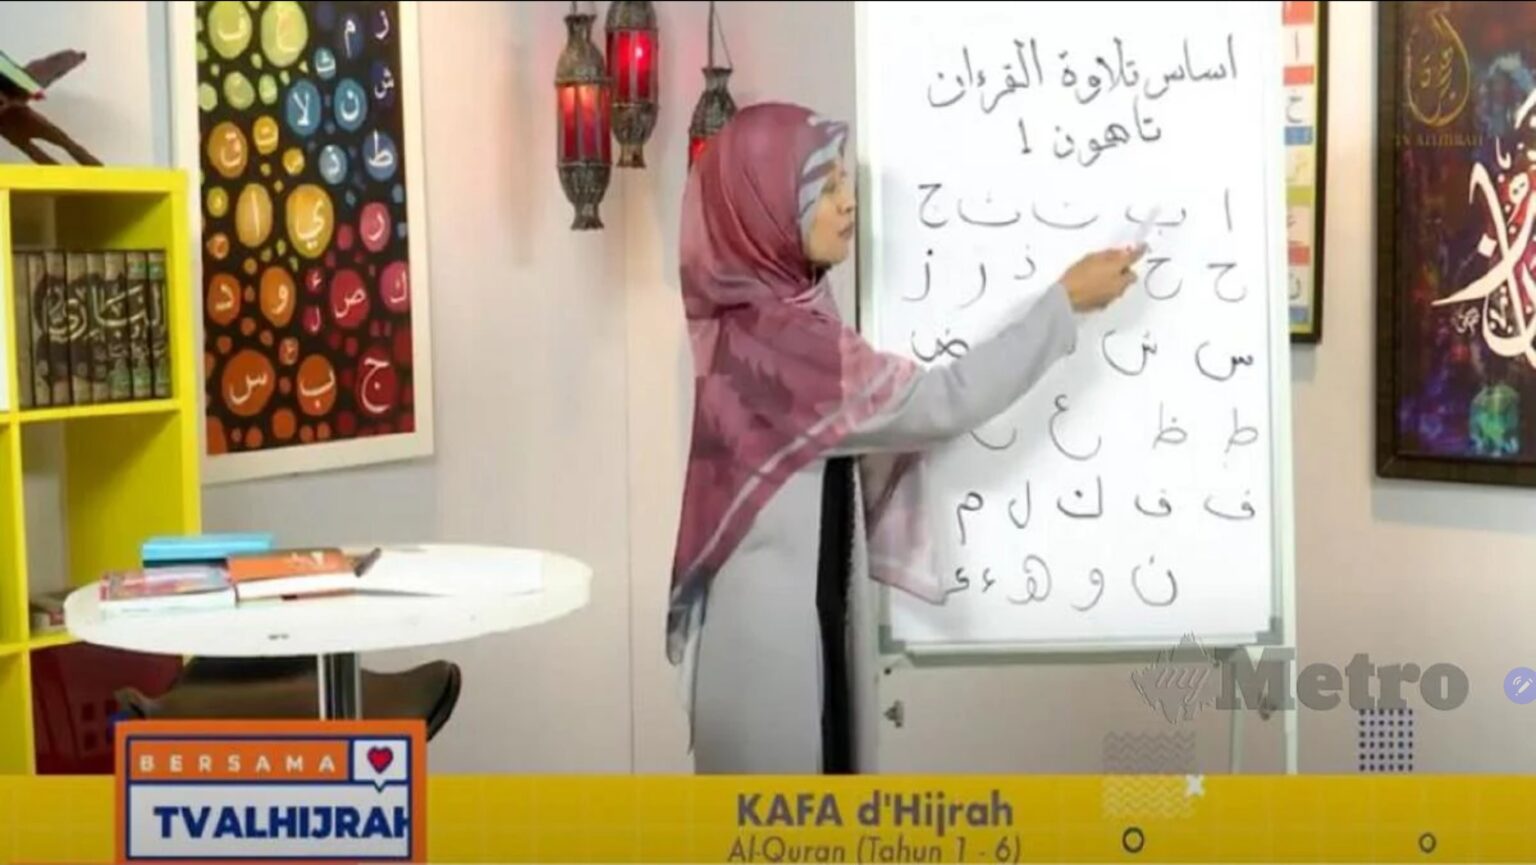 Pendidikan: Kelas KAFA d'Hijrah di TV Alhijrah